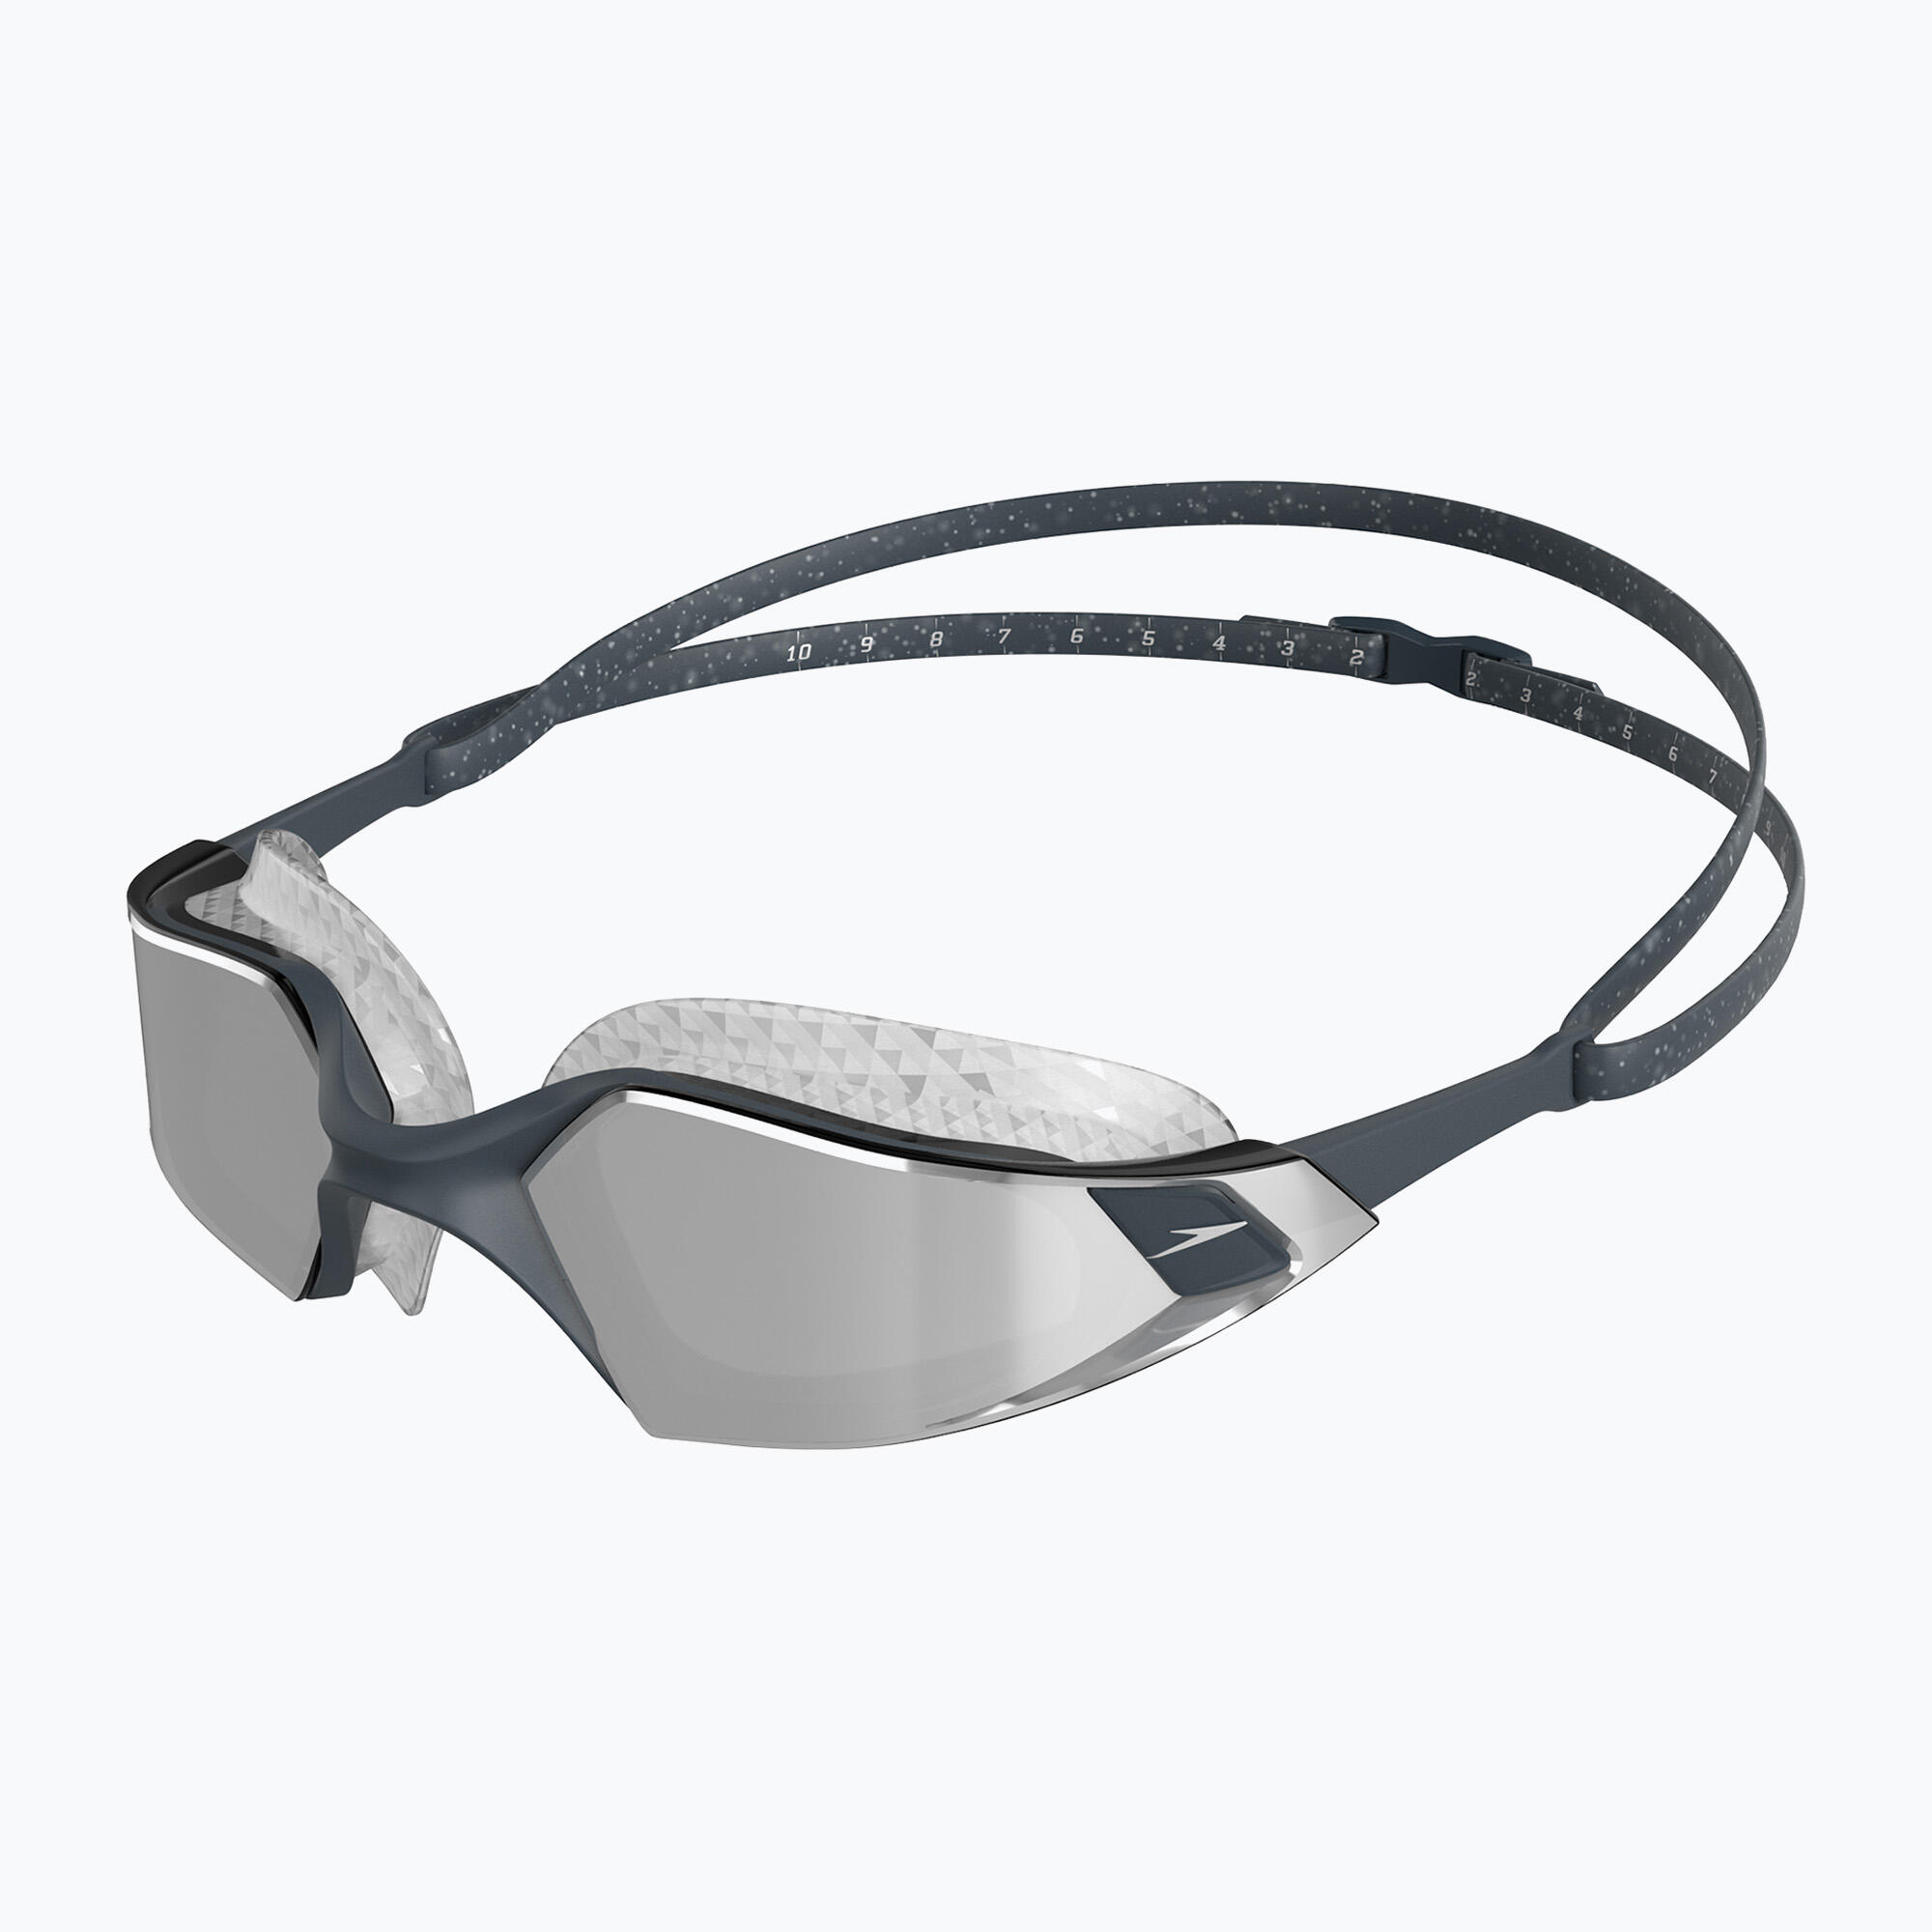 Speedo Aquapulse Pro Mirrored Goggles - Oxid Grey / Silver 5/5